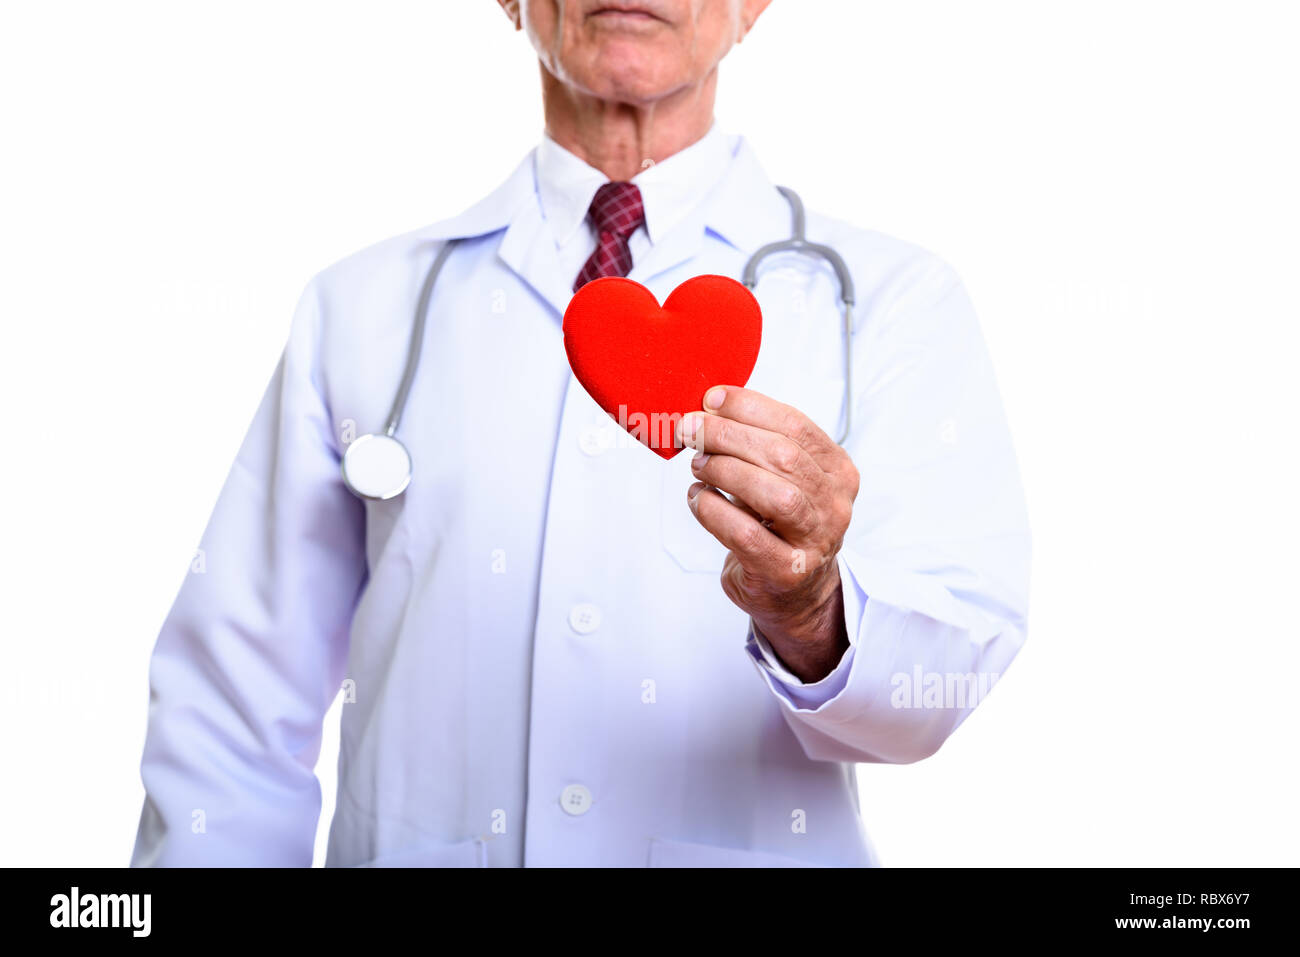 Senior man doctor holding red heart isolated against white background Stock Photo